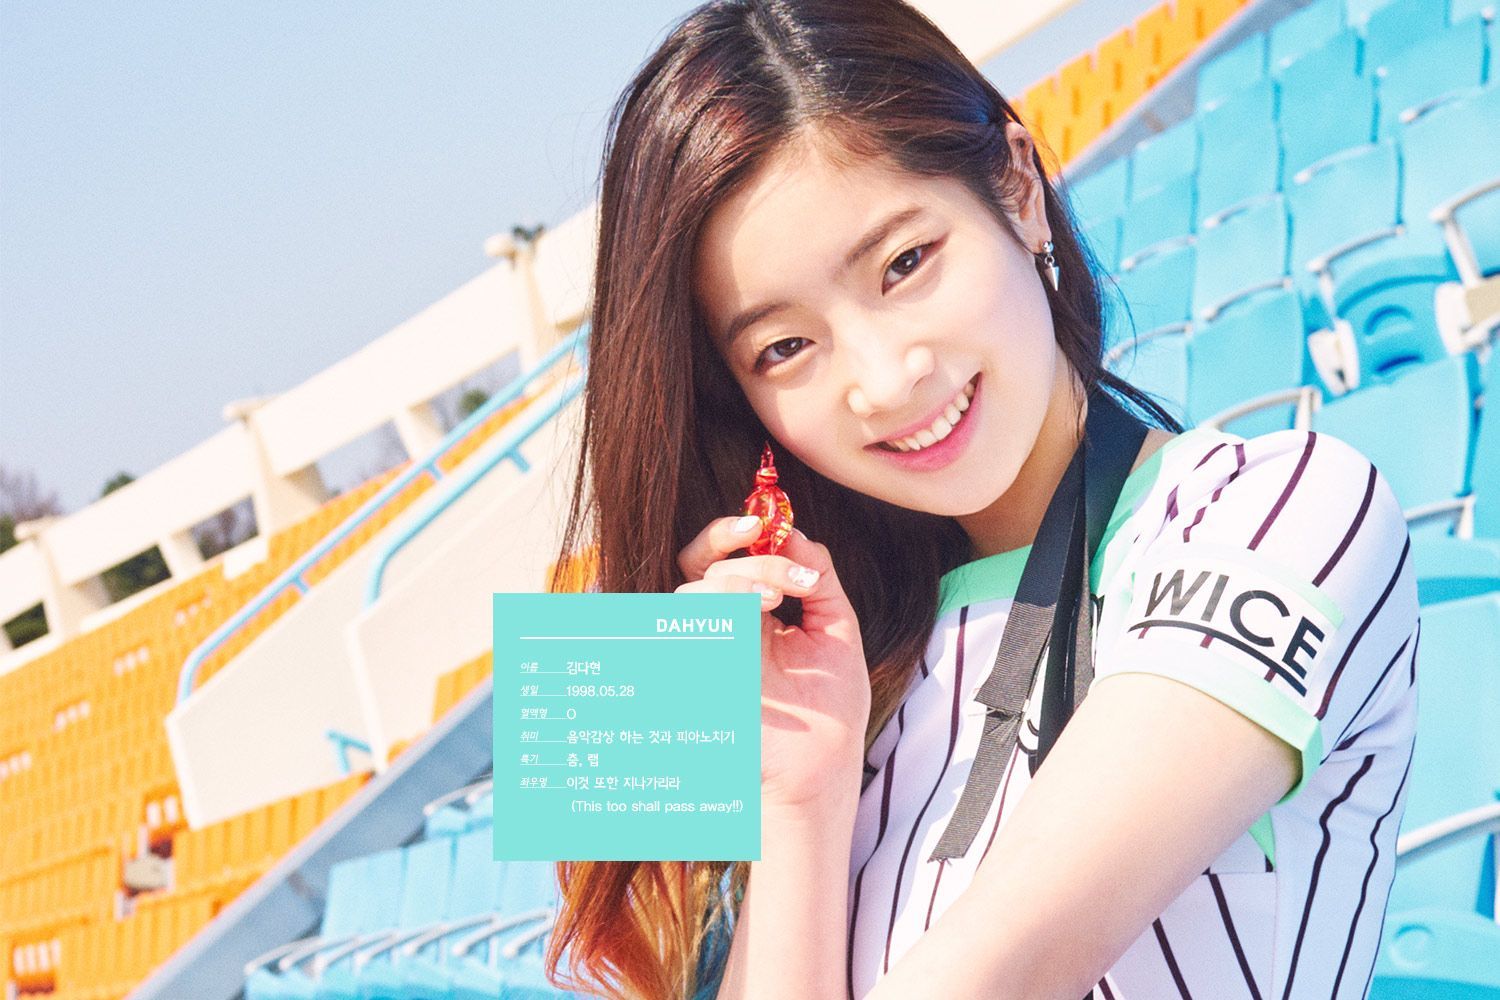 Twice Dahyun Wallpaper Photohoot Cheer Up, Download Wallpaper